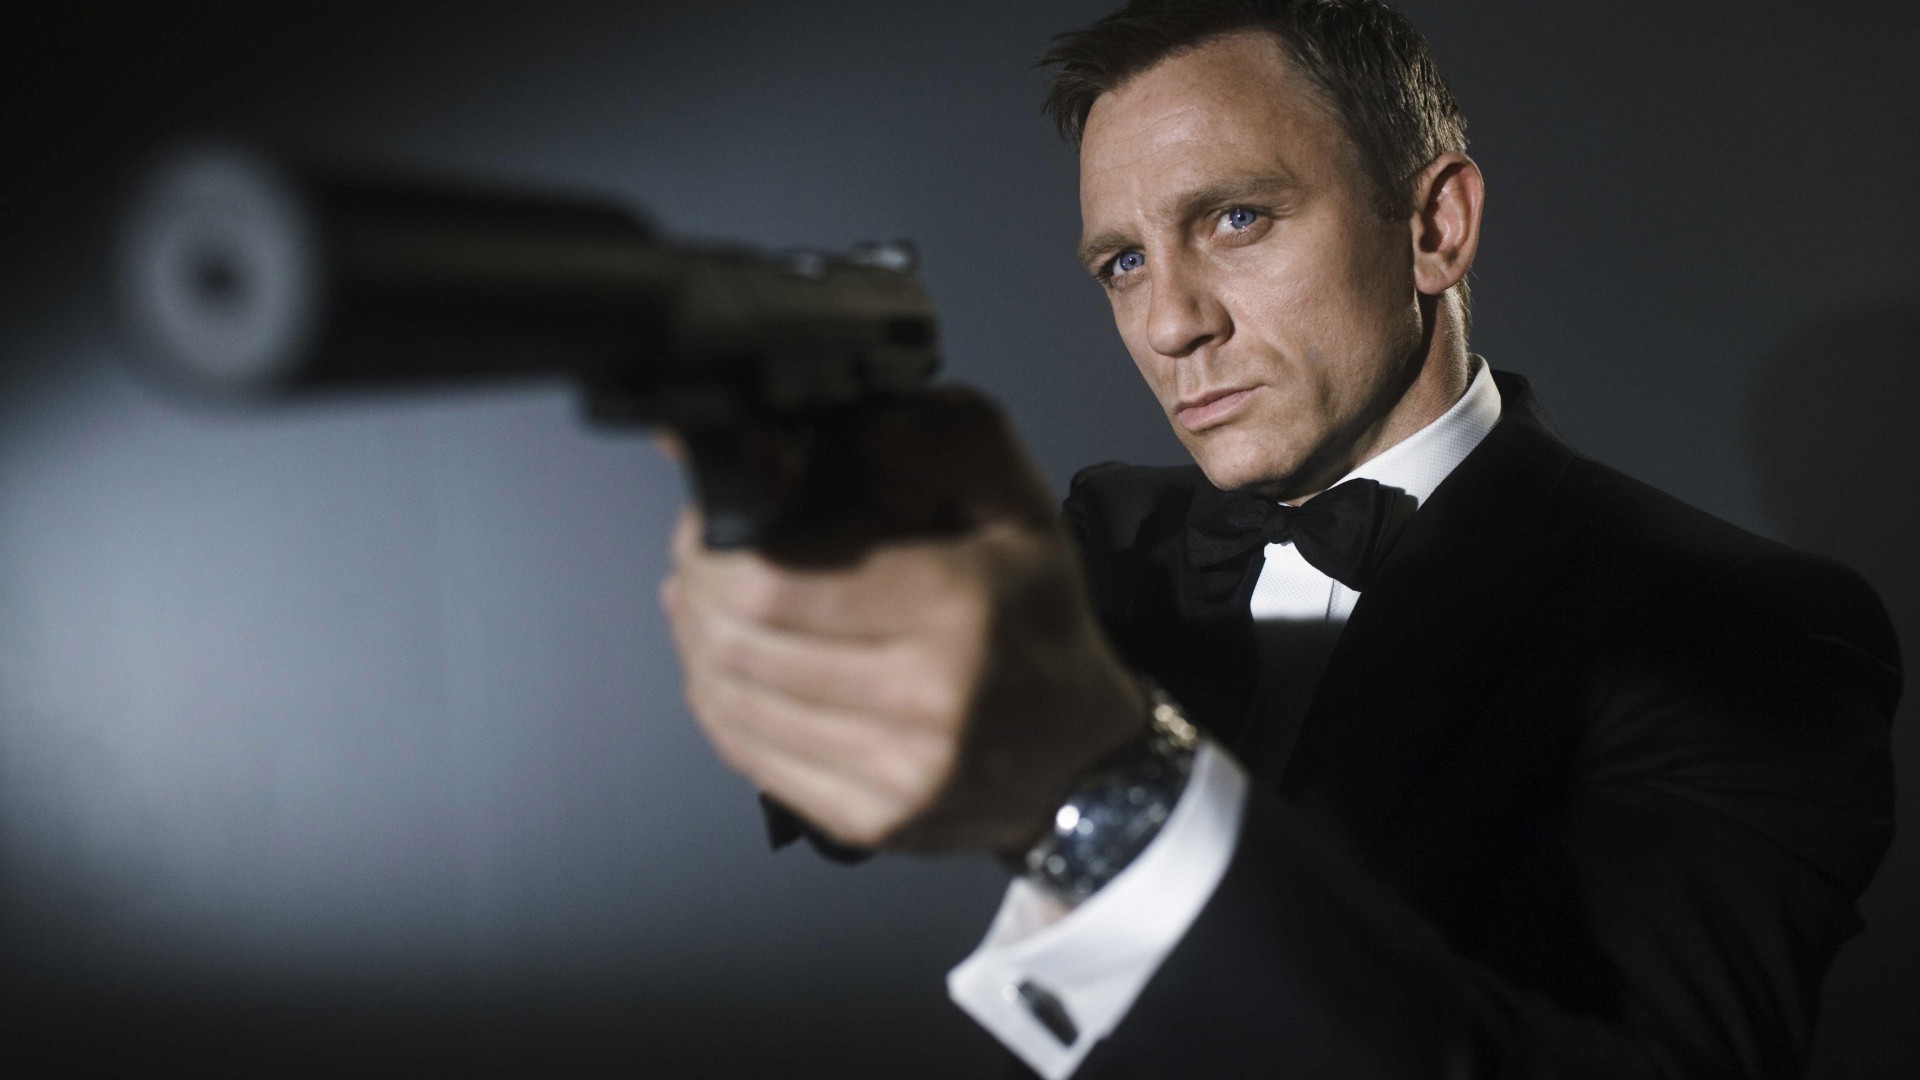 Daniel Craig, 007, James Bond, Most Popular Celebs in 2015, actor, gun (horizontal)